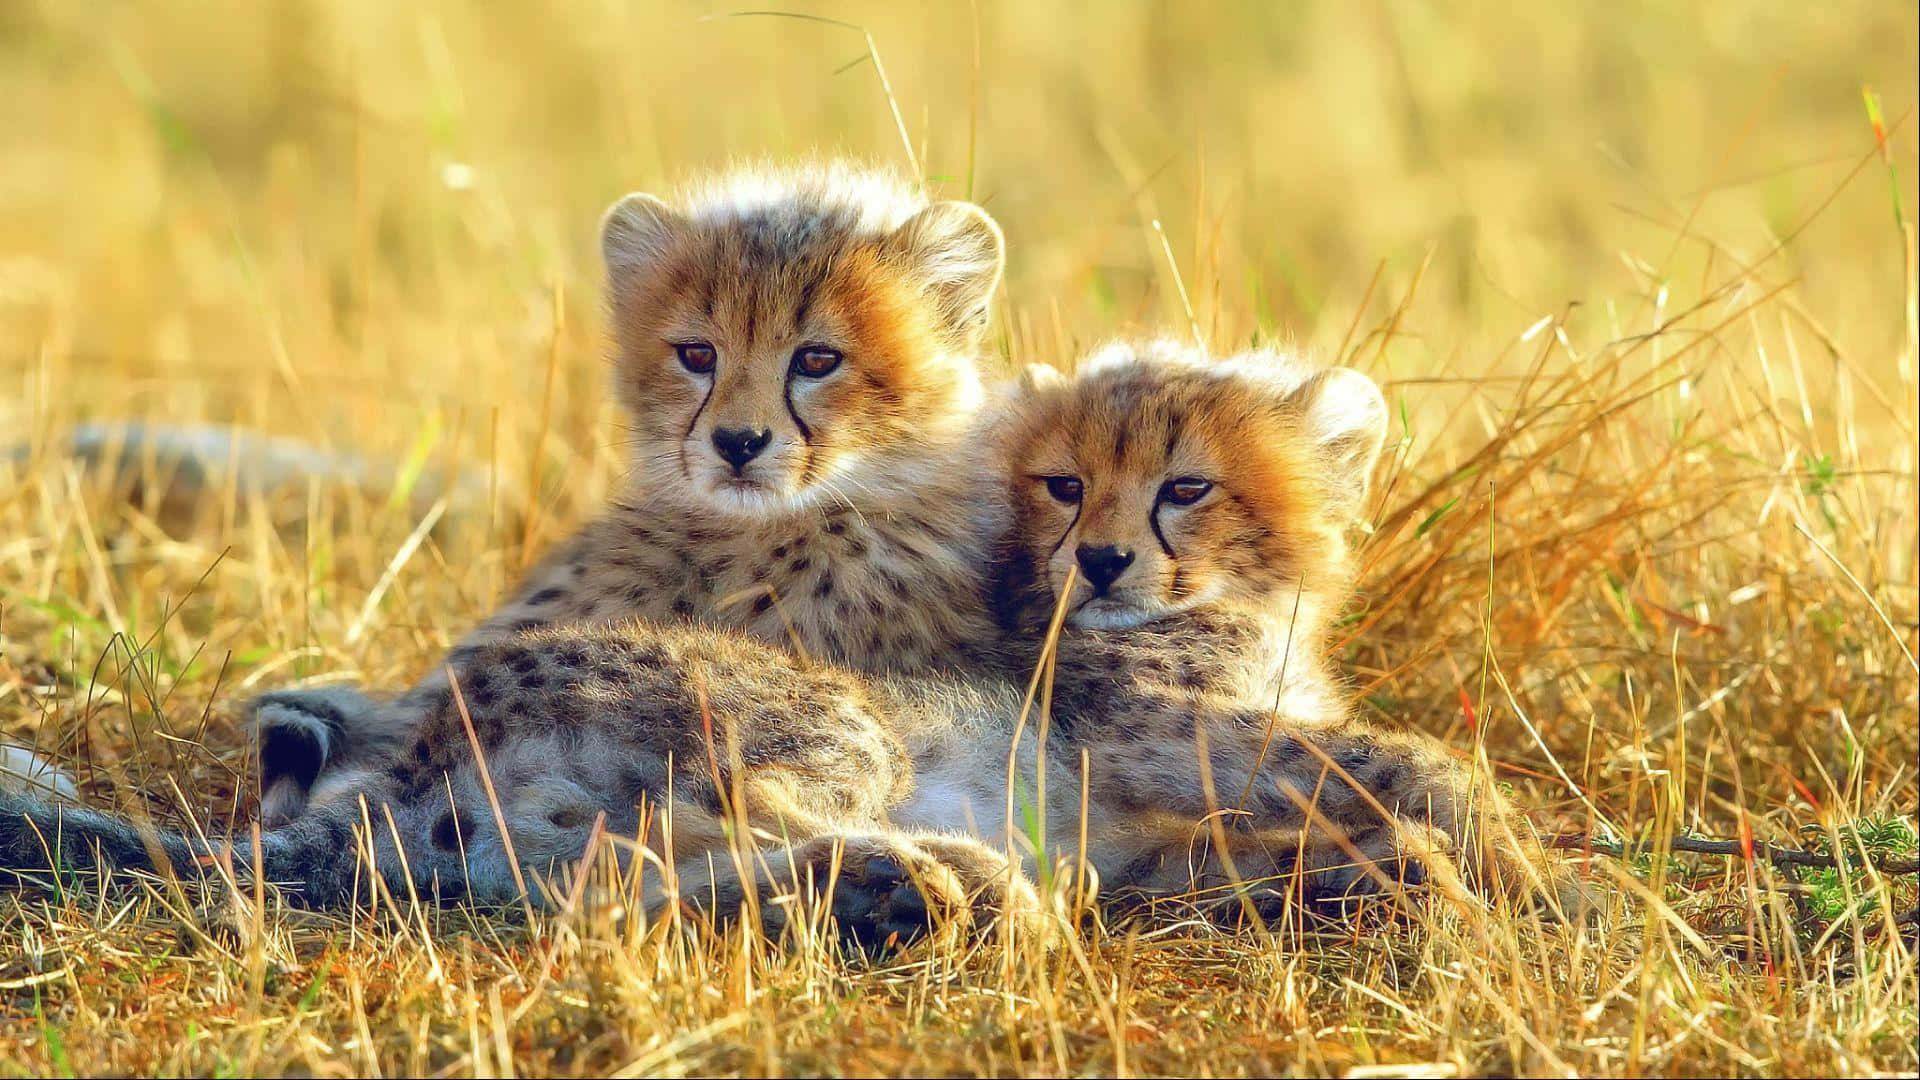 Three baby cheetahs playing on the grass. Wallpaper